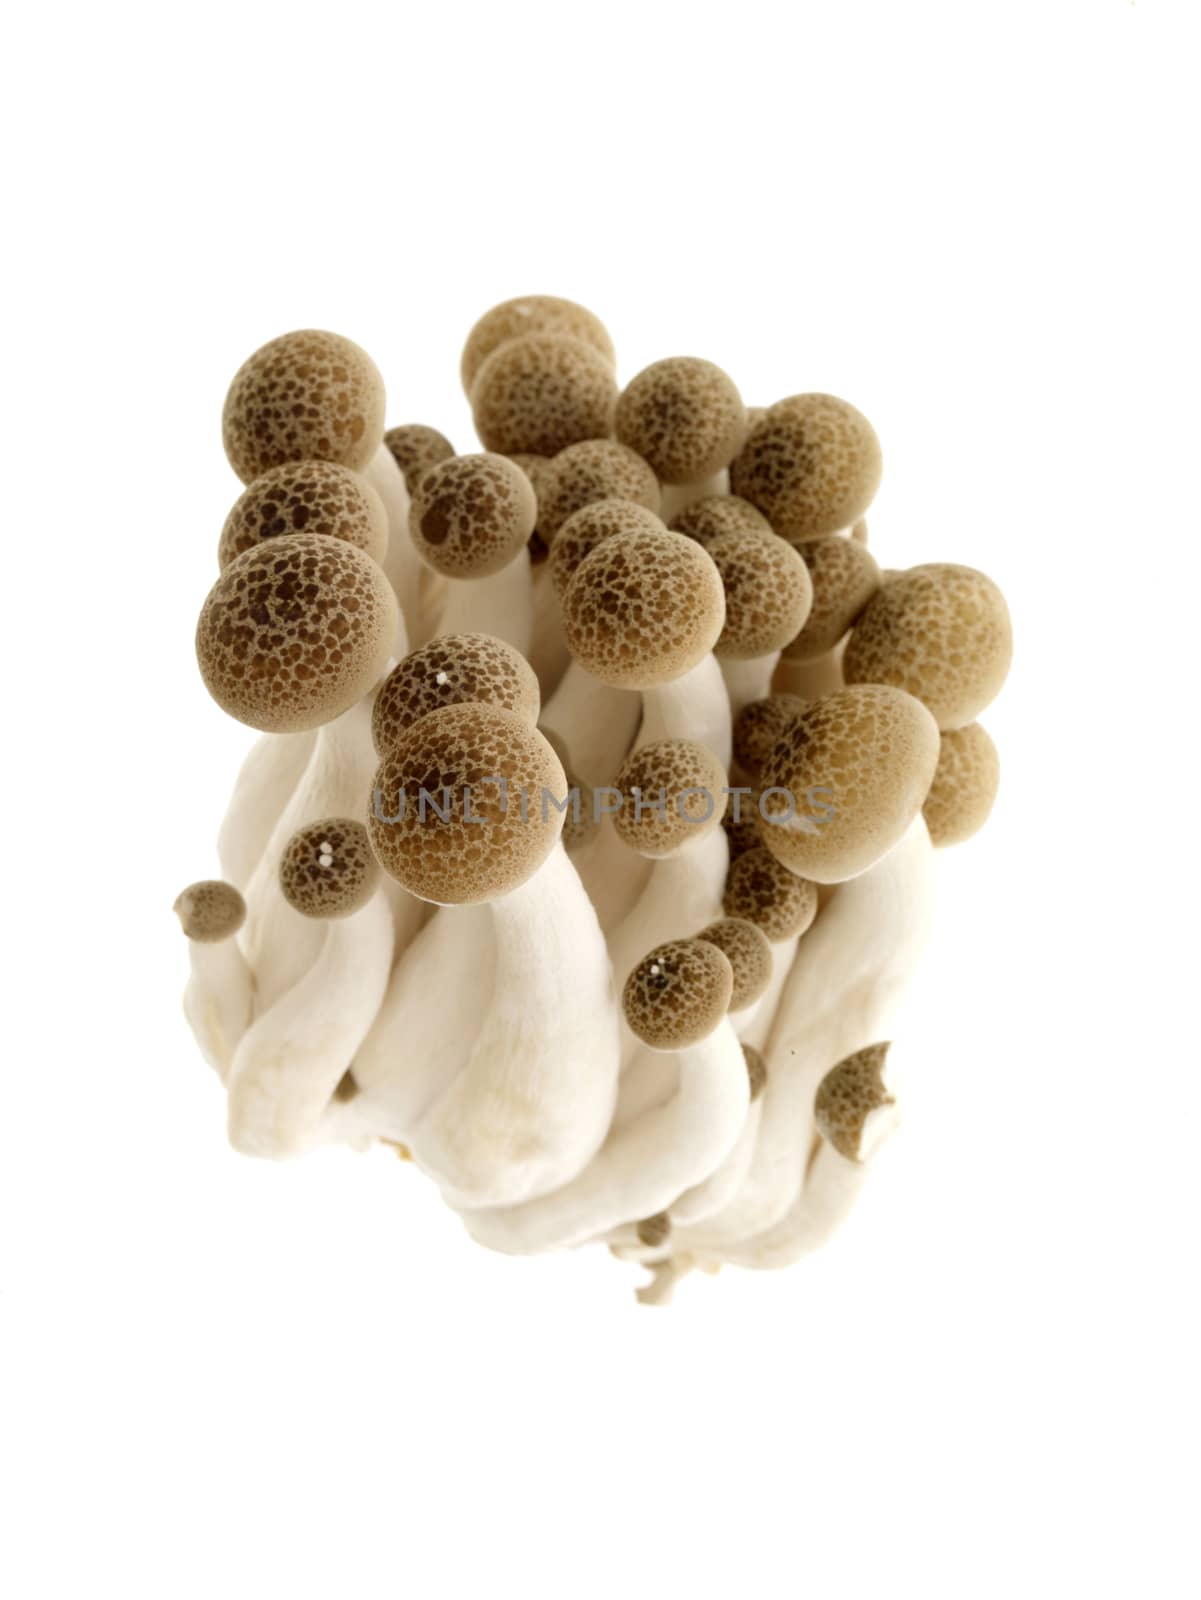 Hon-Shimeji Mushrooms by Whiteboxmedia